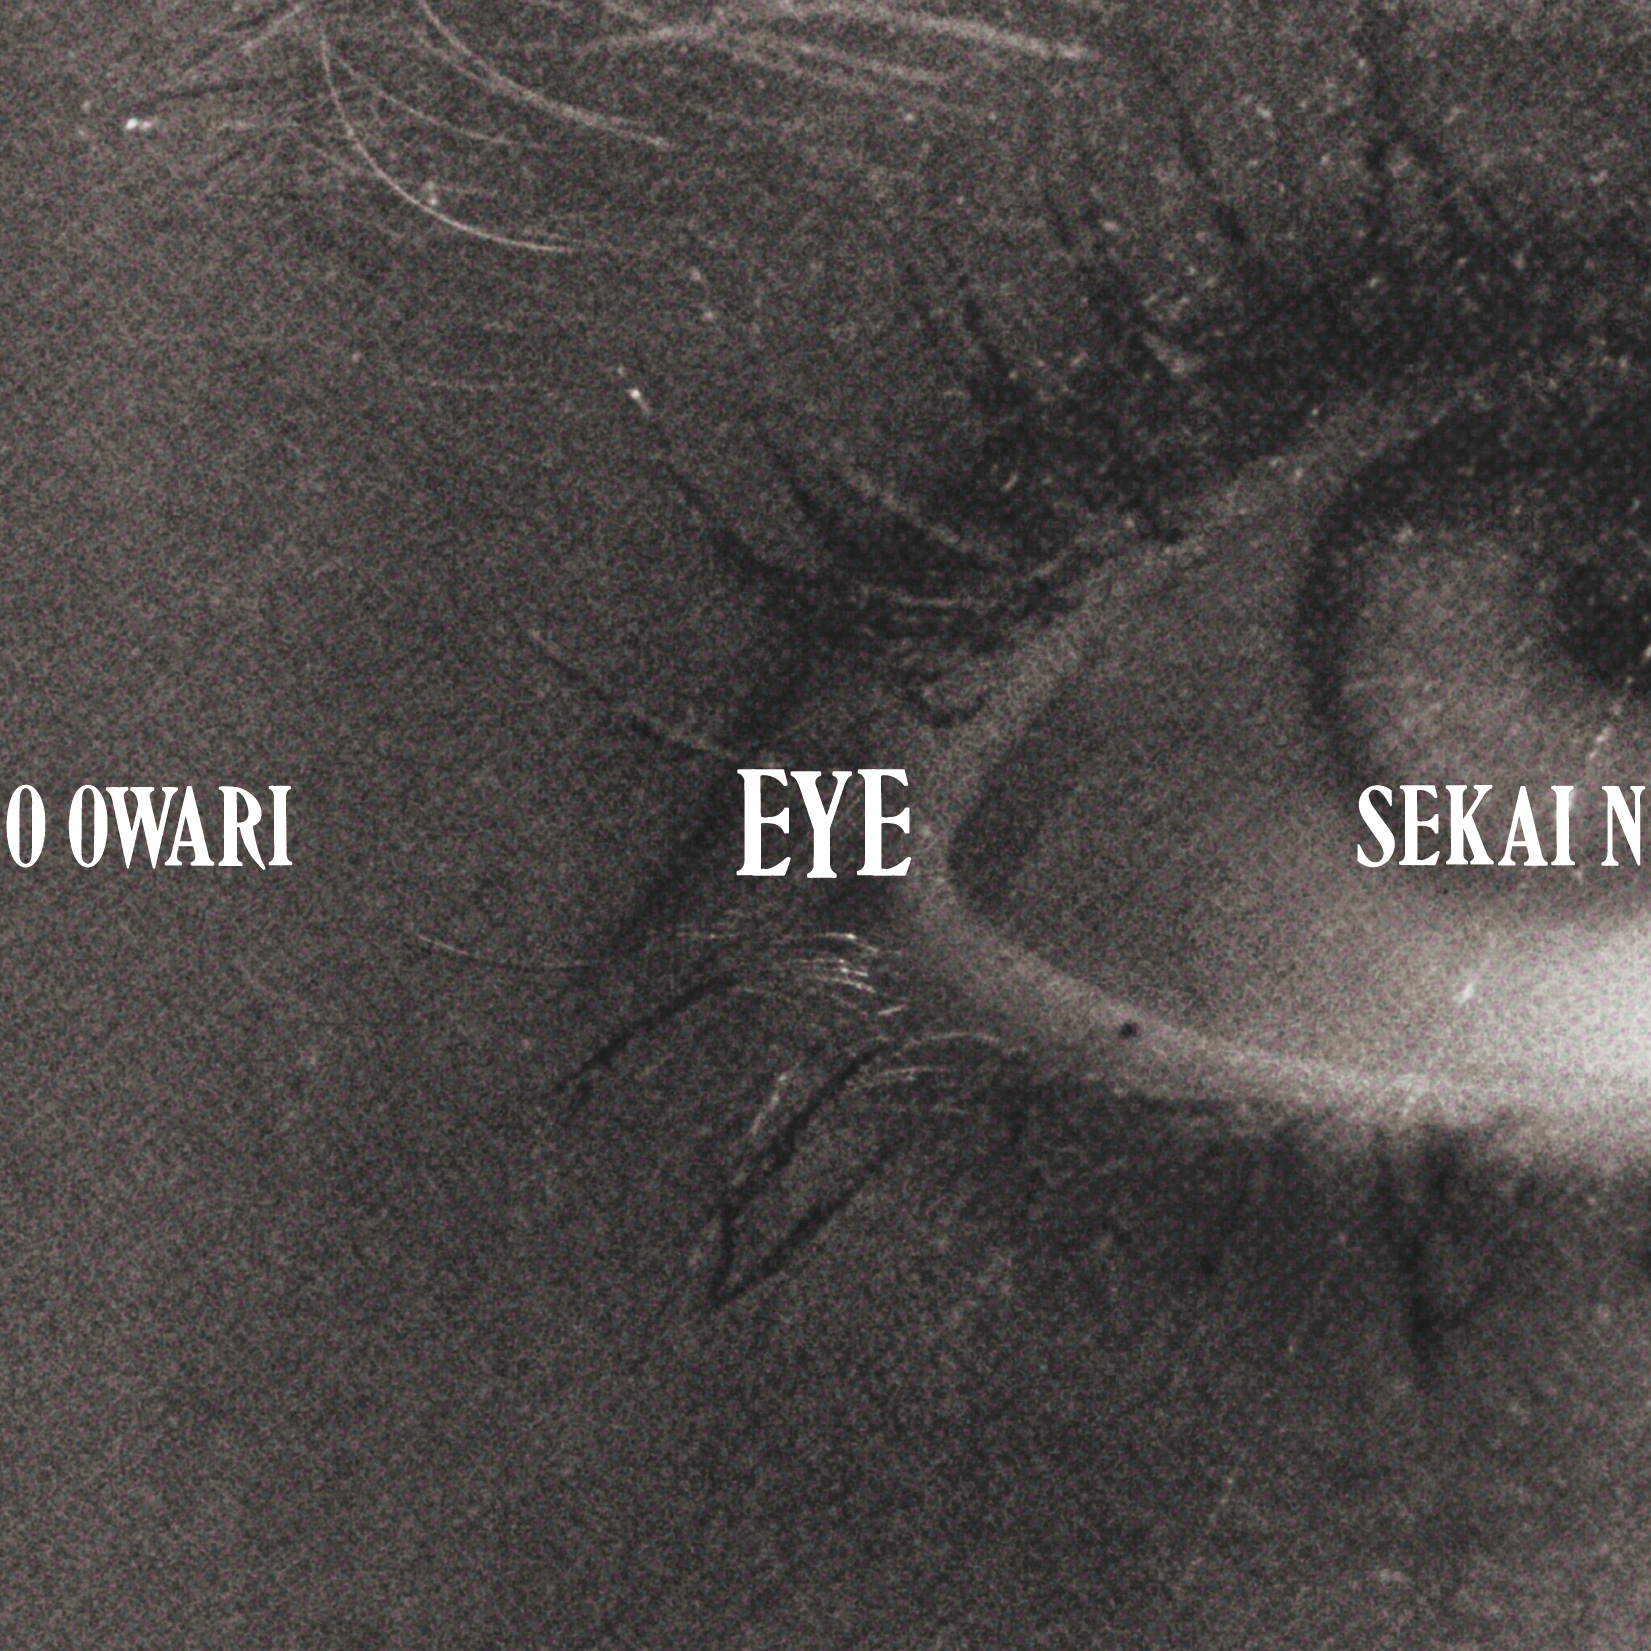 Sekai No Owari ニューアルバム Eye Lip 特典はステッカー 19年2月27日 2枚同時リリース ジャパニーズポップス